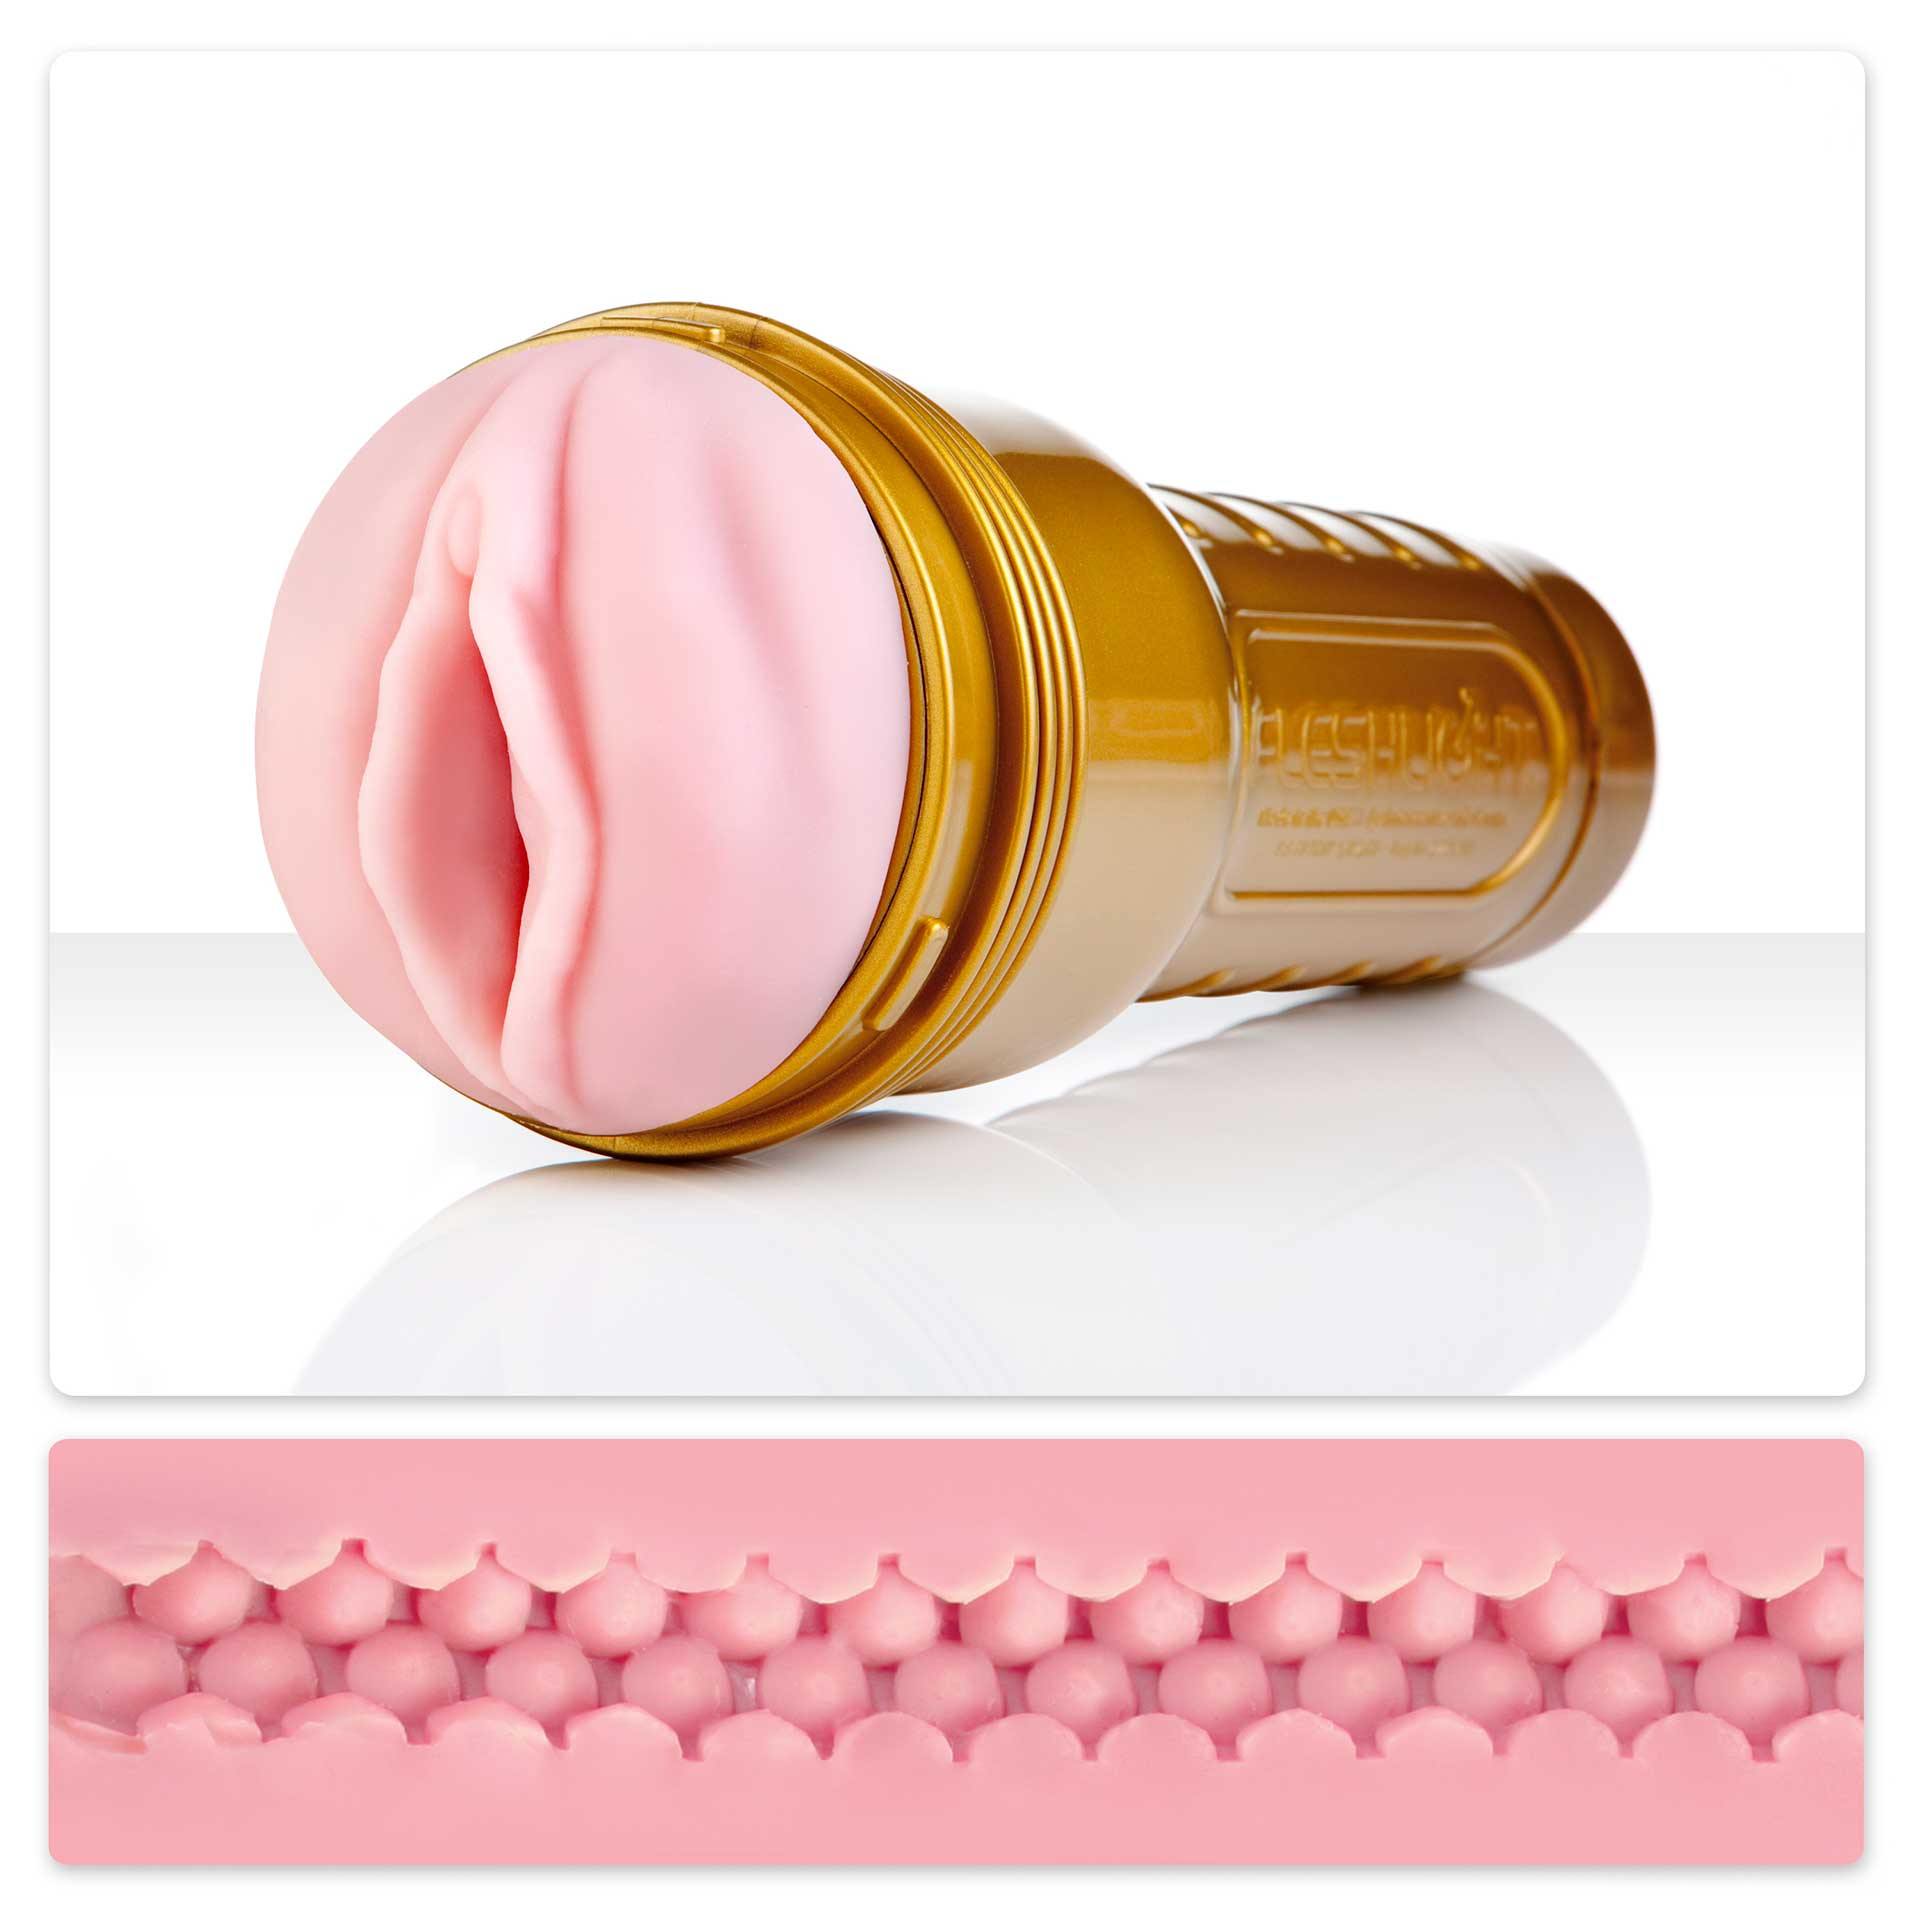 Fleshlight Pink Lady Stamina Training Unit - Buy At Luxury Toy X - Free 3-Day Shipping